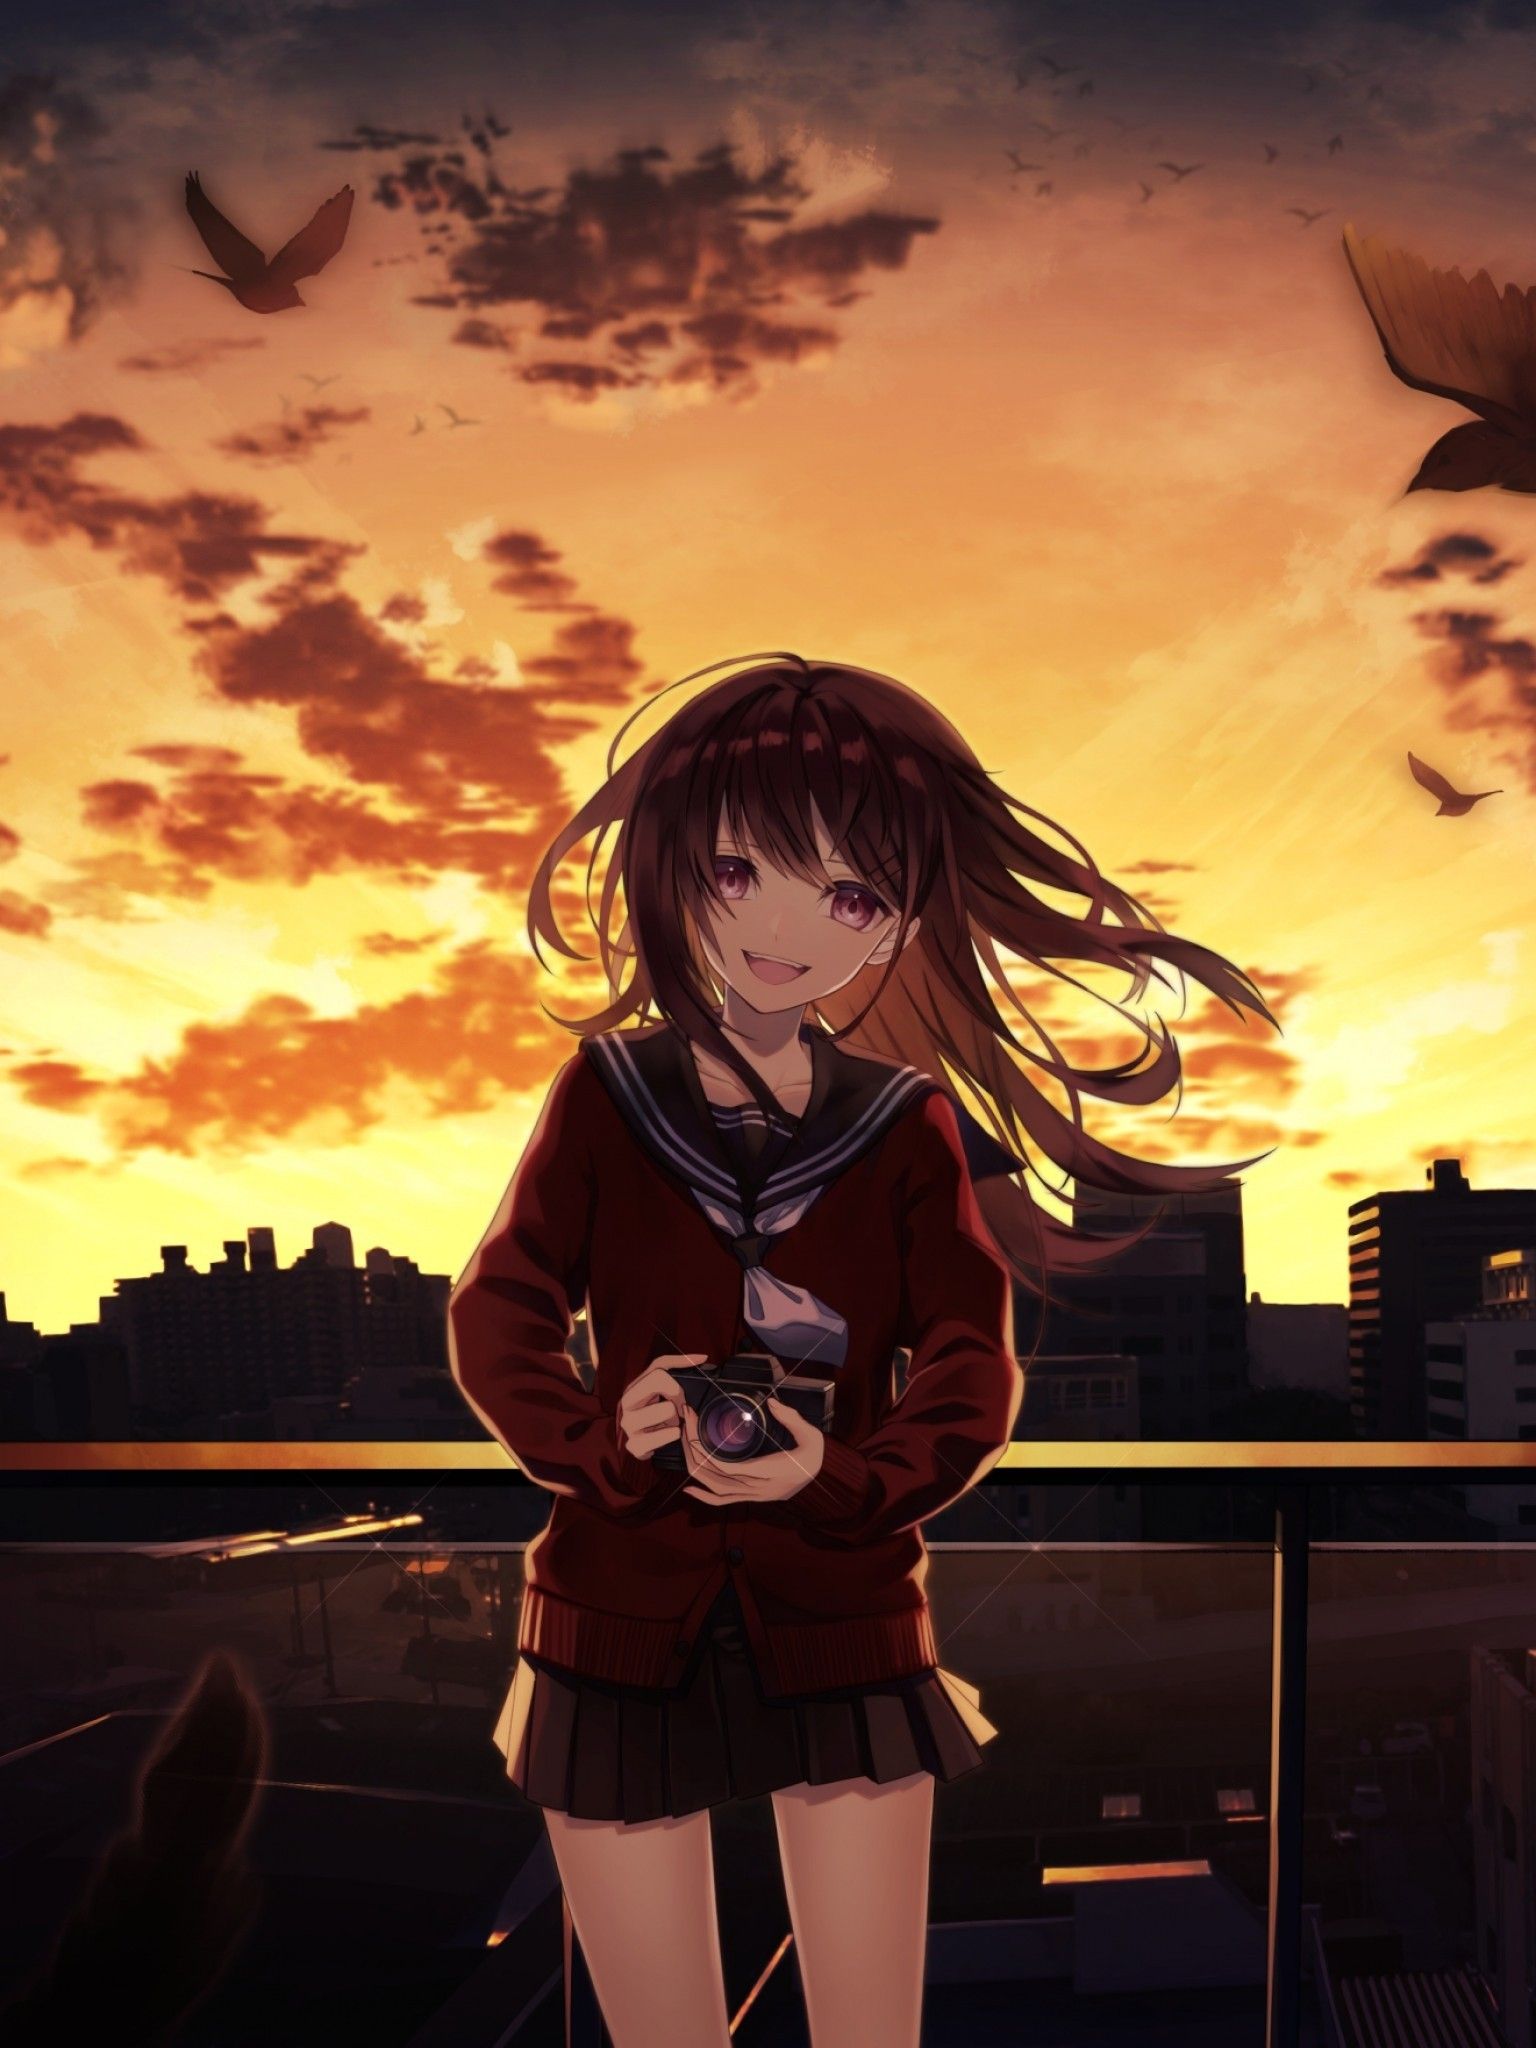 Wallpaper anime girl, camera, cute desktop wallpaper, hd image, picture,  background, b97351 | wallpapersmug